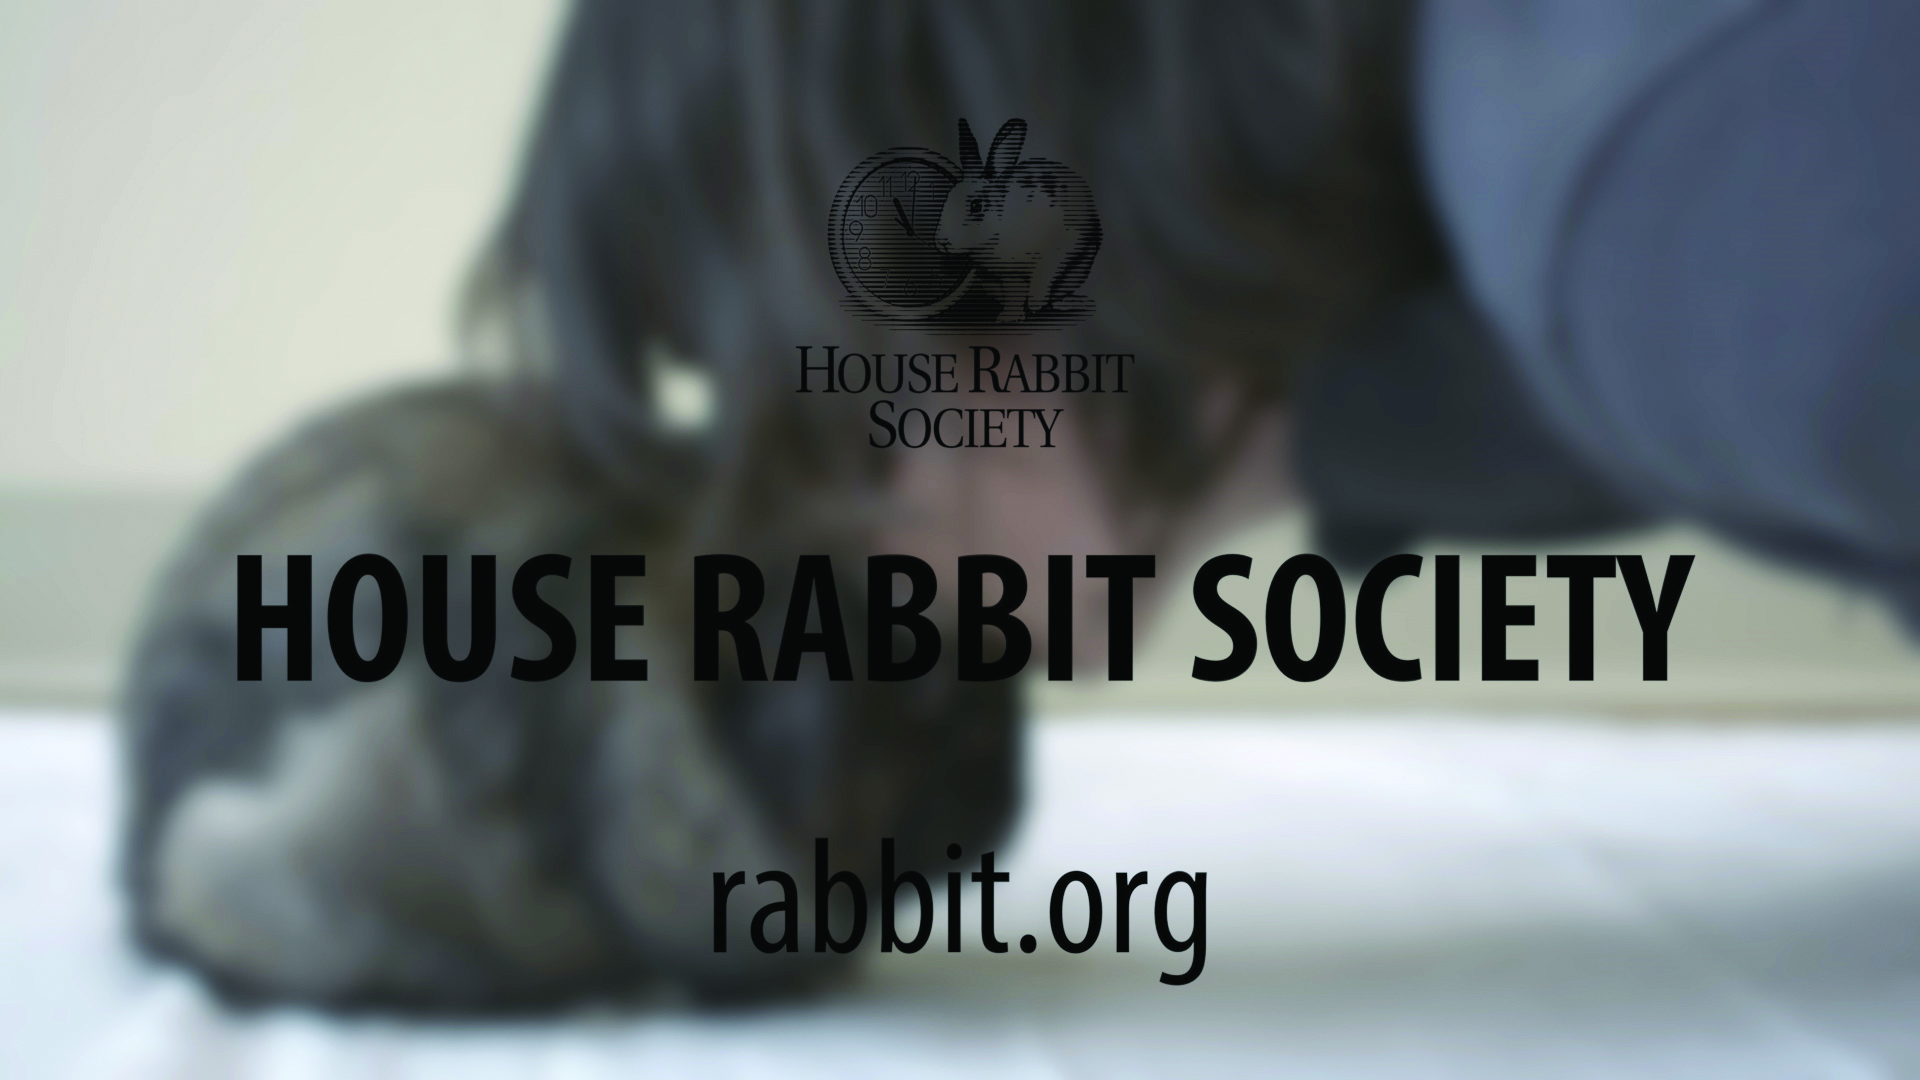 House Rabbit Society Tv Access Psa Spot Source